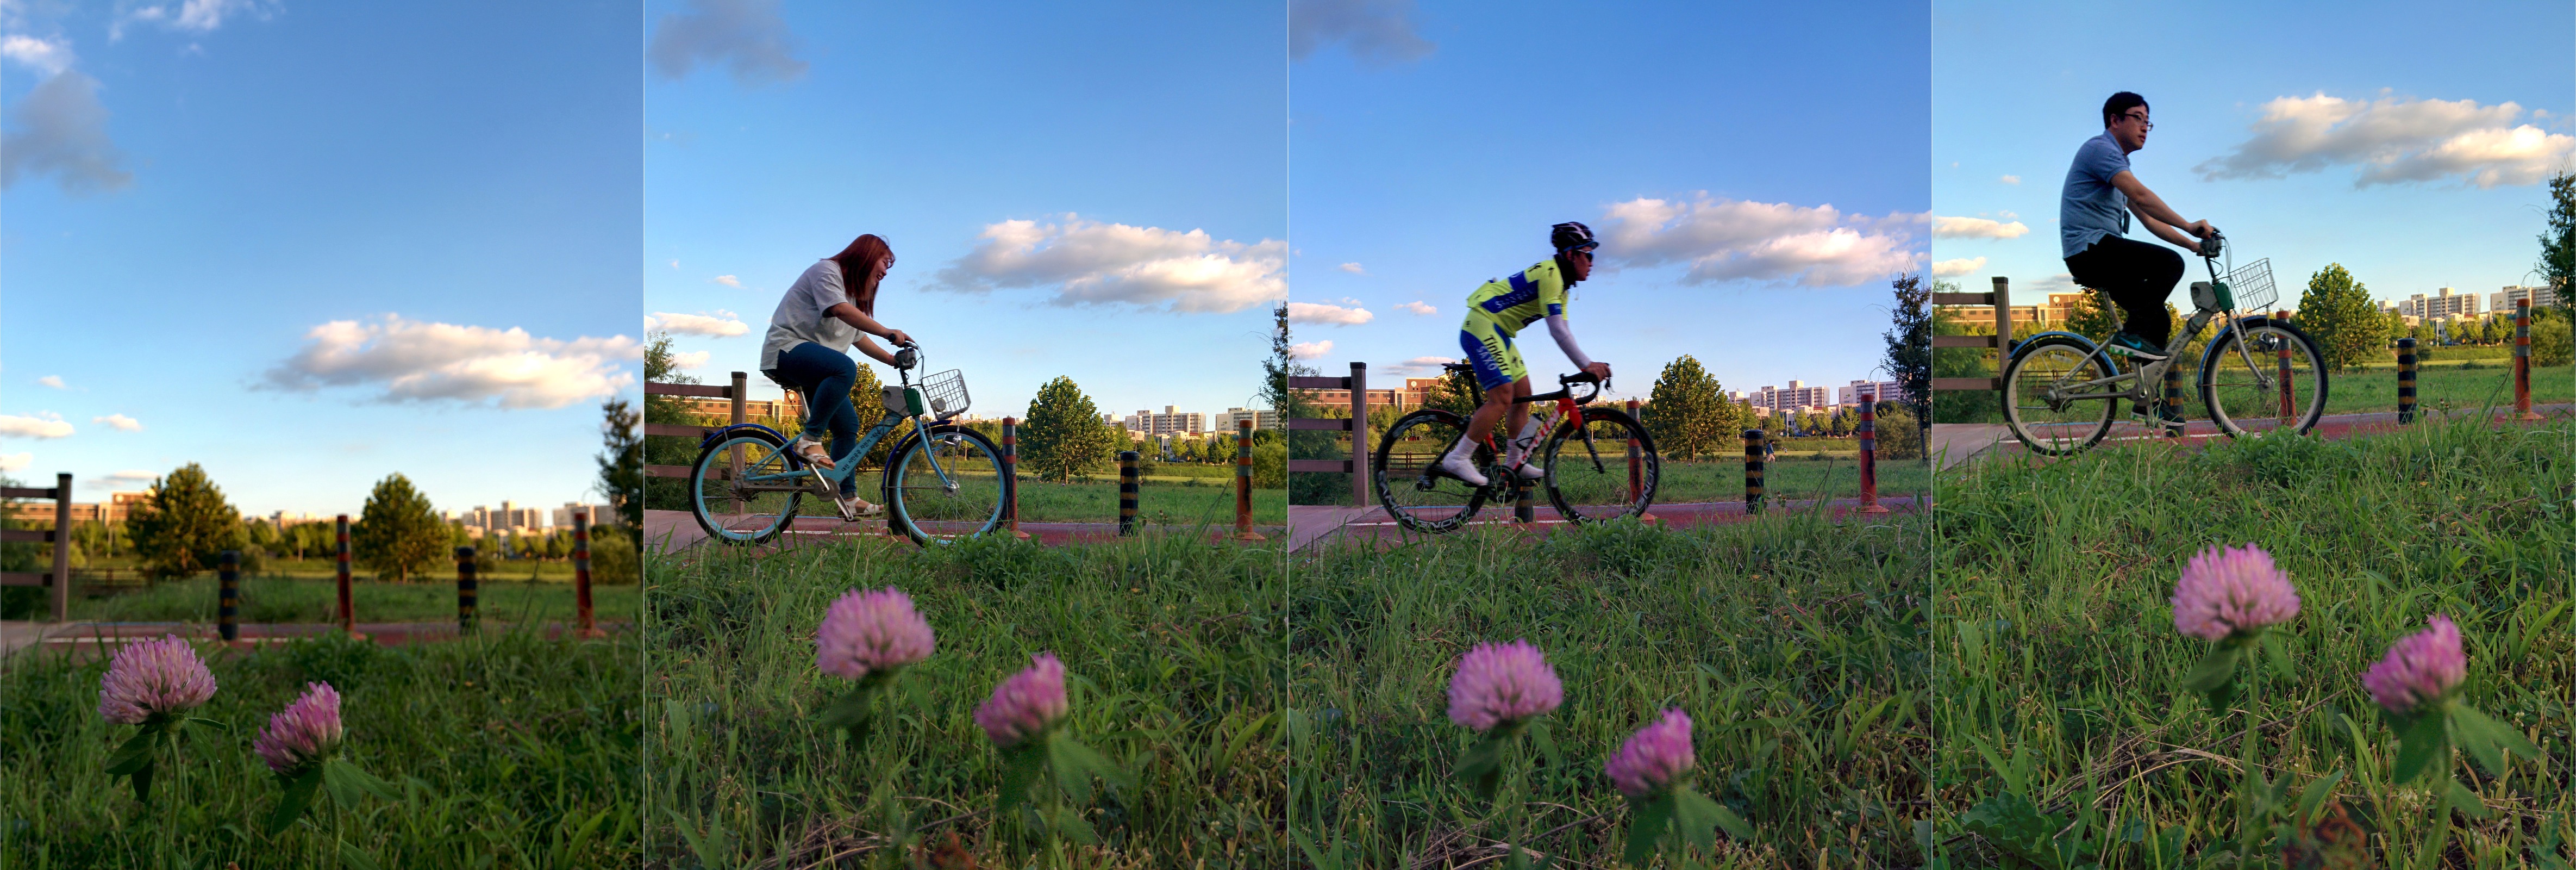 IMG_20150907-bike.jpg 갑천의 자전거 타는 사람들과 붉은토끼풀 꽃